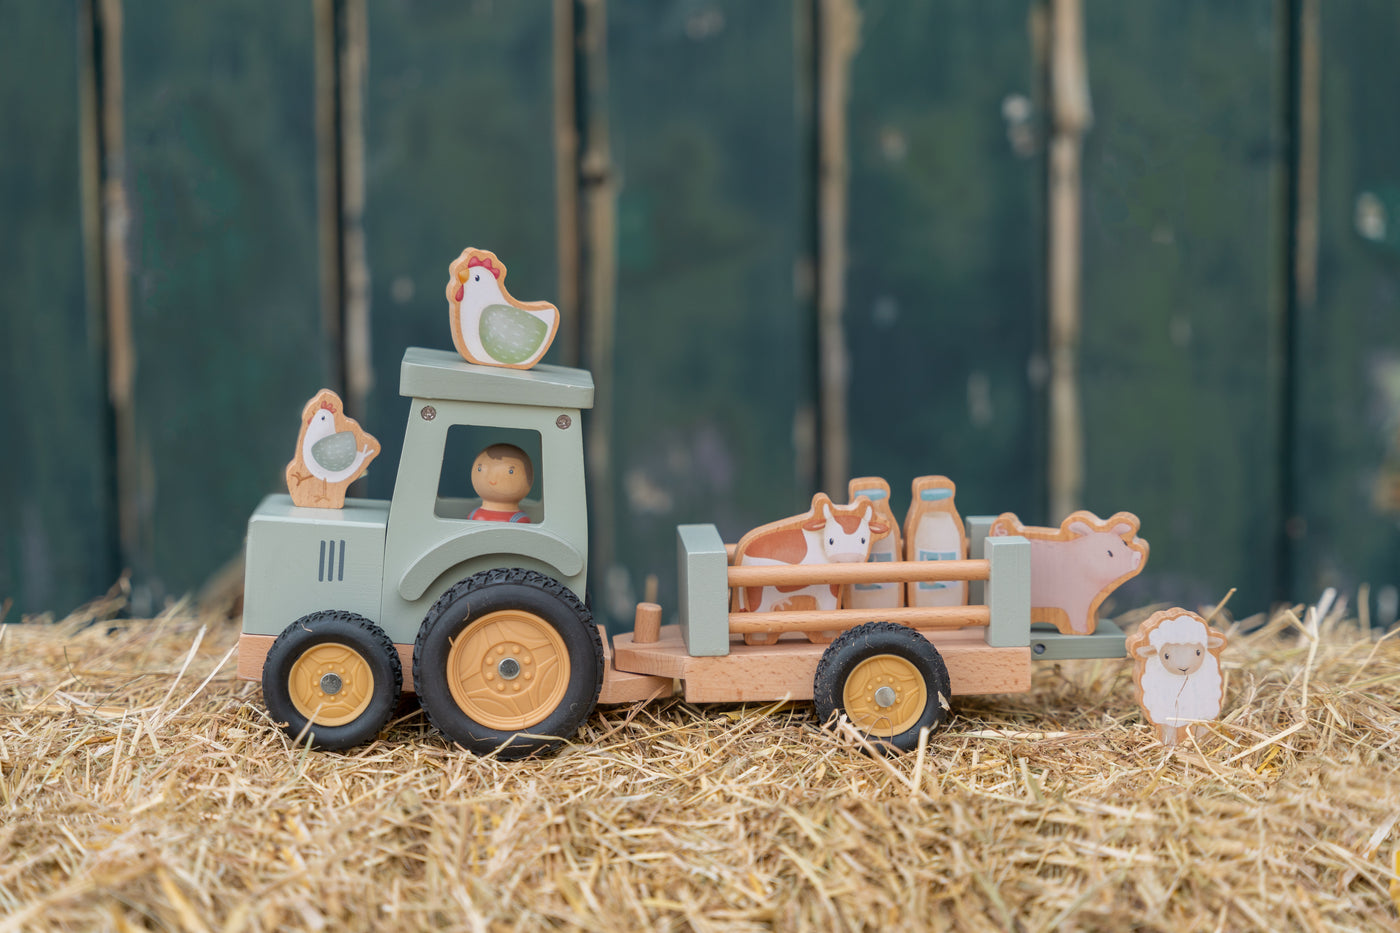 Little Dutch - Little Farm Wooden Tractor with Trailer